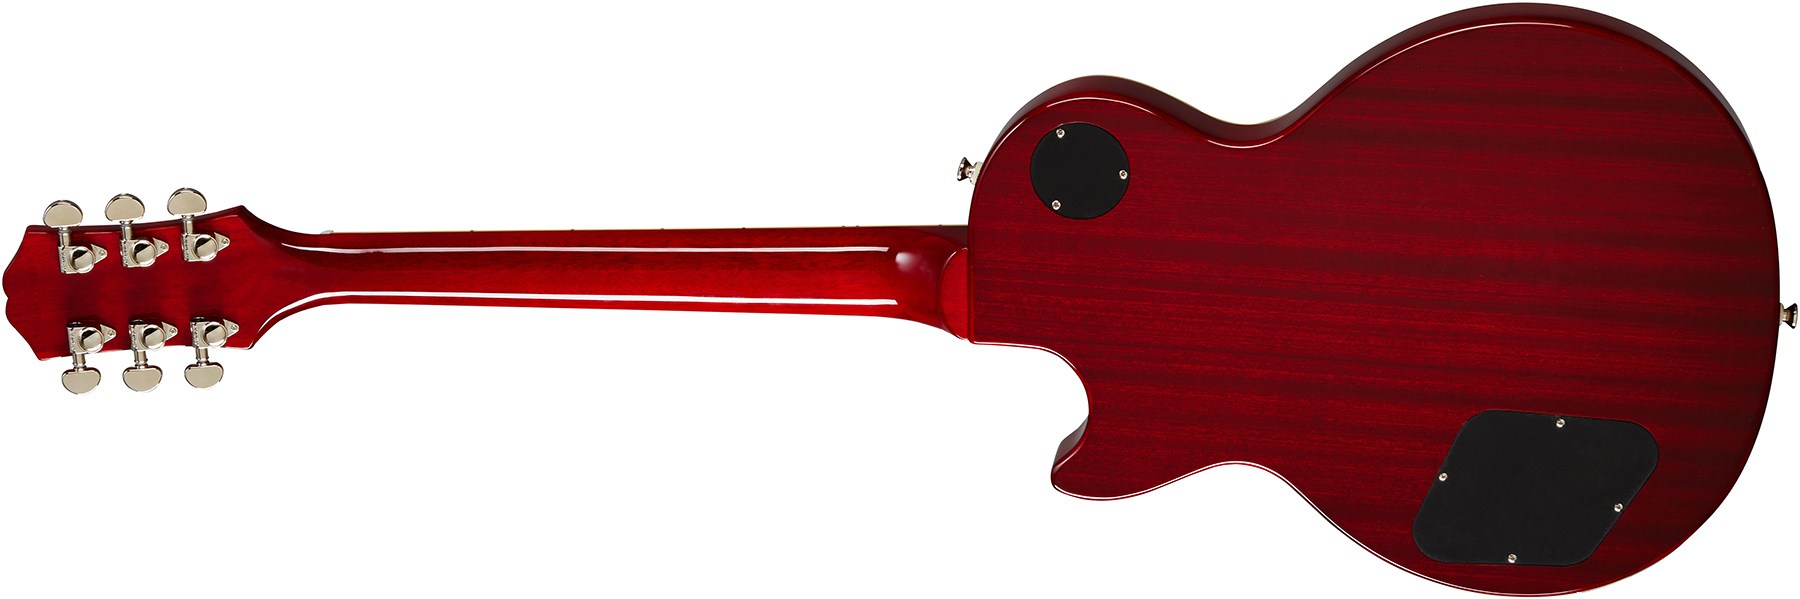 Epiphone Les Paul Classic Modern 2020 2h Ht Lau - Heritage Cherry Sunburst - Enkel gesneden elektrische gitaar - Variation 1